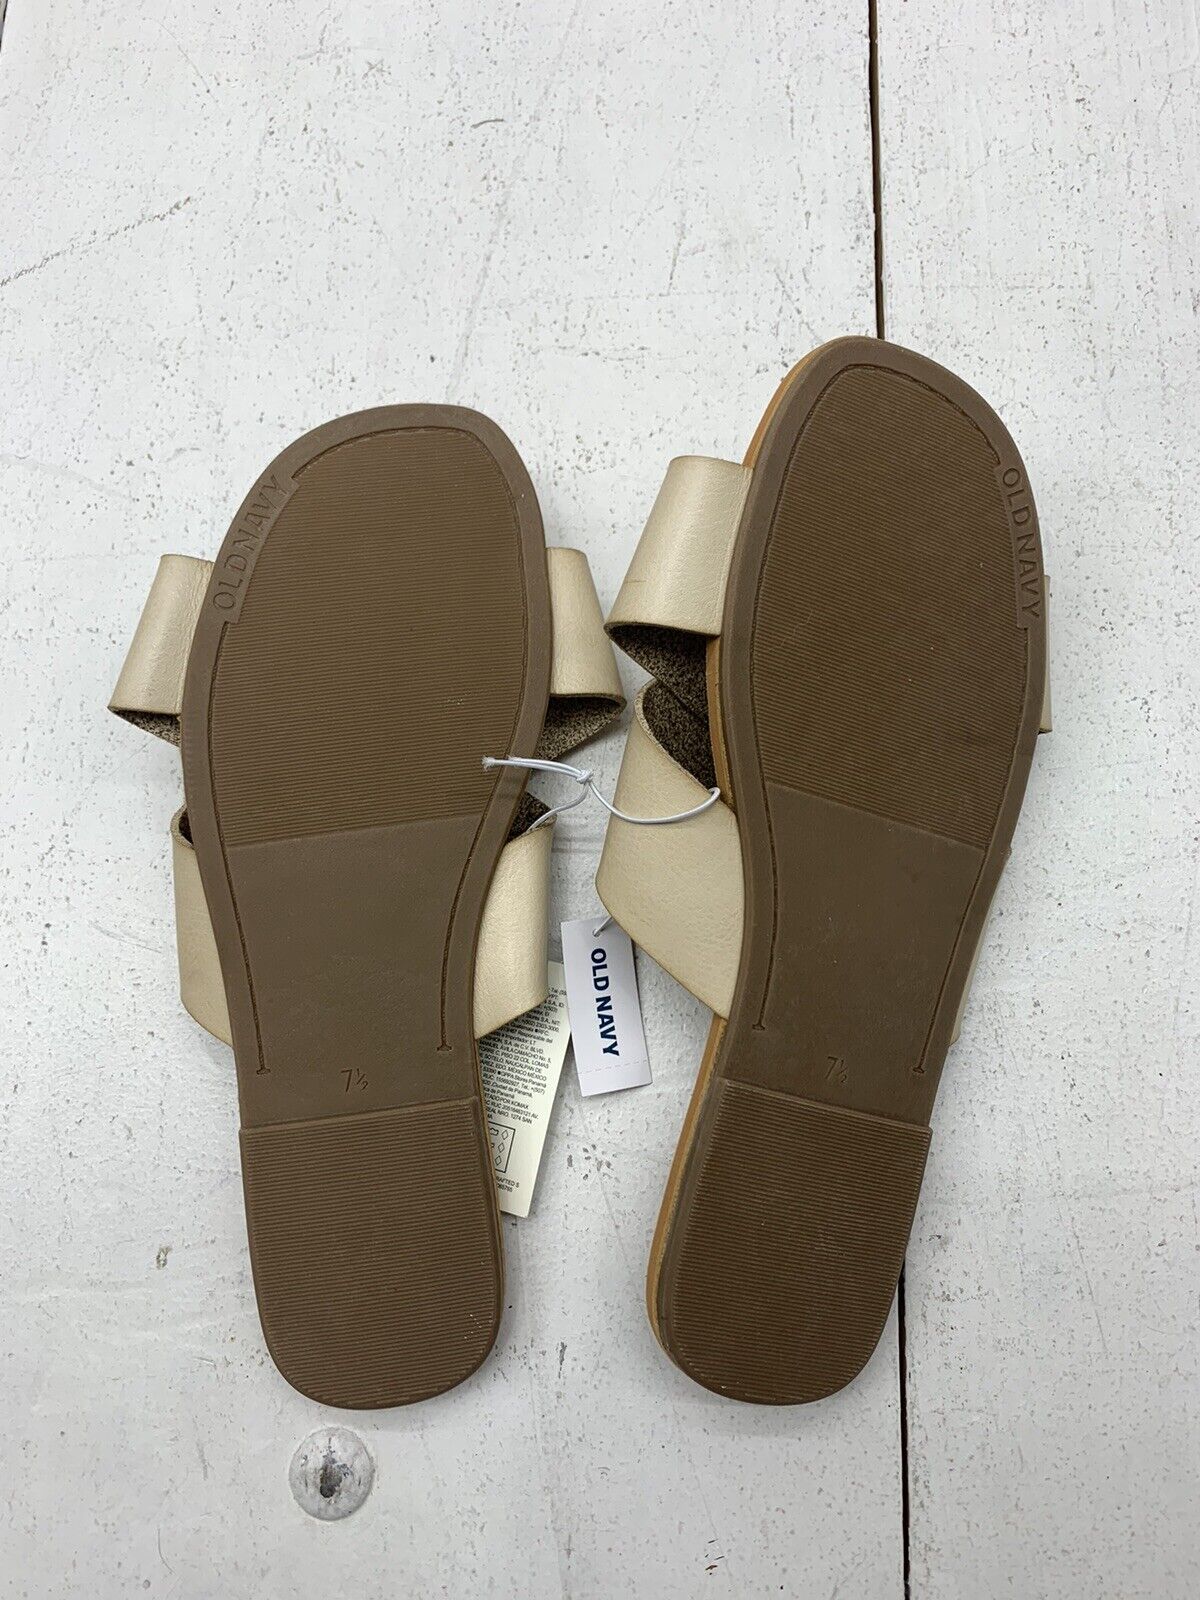 Old Navy Womens Tan/Brown Cross Strap Slip On Sandals Size 7.5 - beyond  exchange